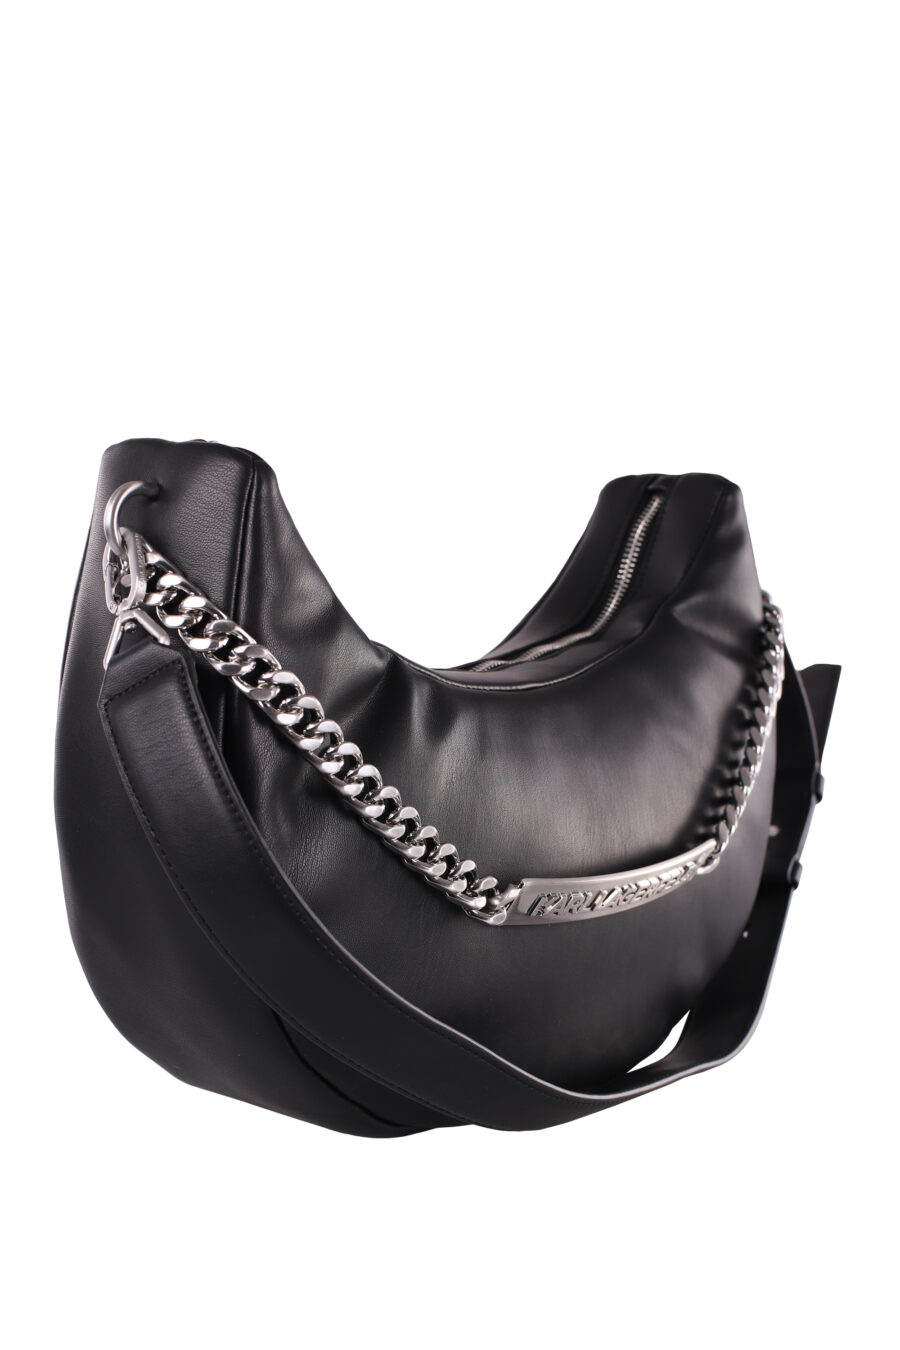 Bolso bandolera negro estilo hobo con cadena plateada - IMG 6046